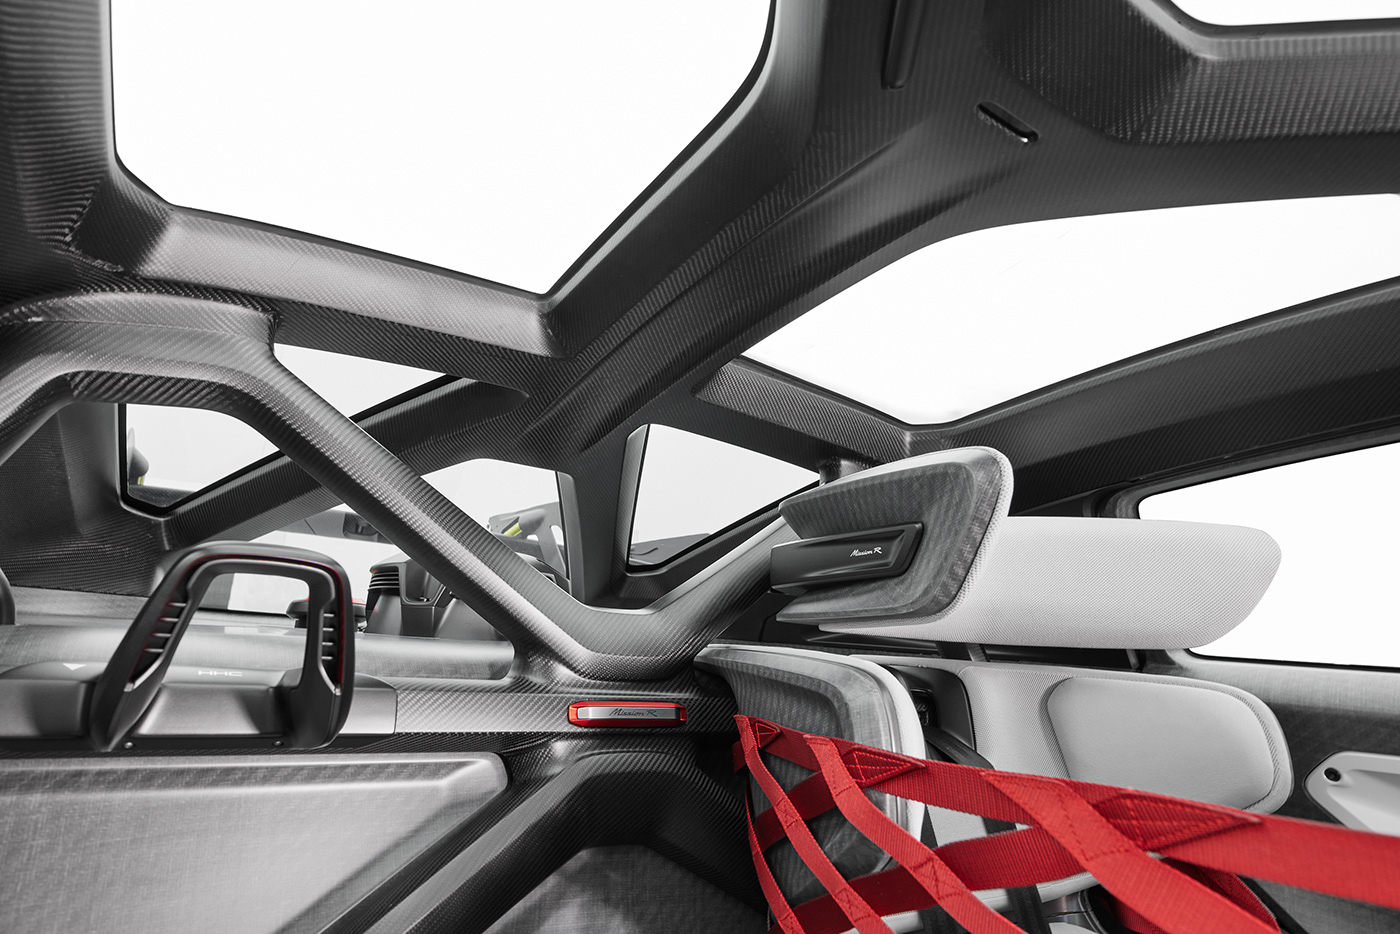 Automotive design Porsche showcar conceptcardesign interiordesign Motorsport mission r cardesign sketch